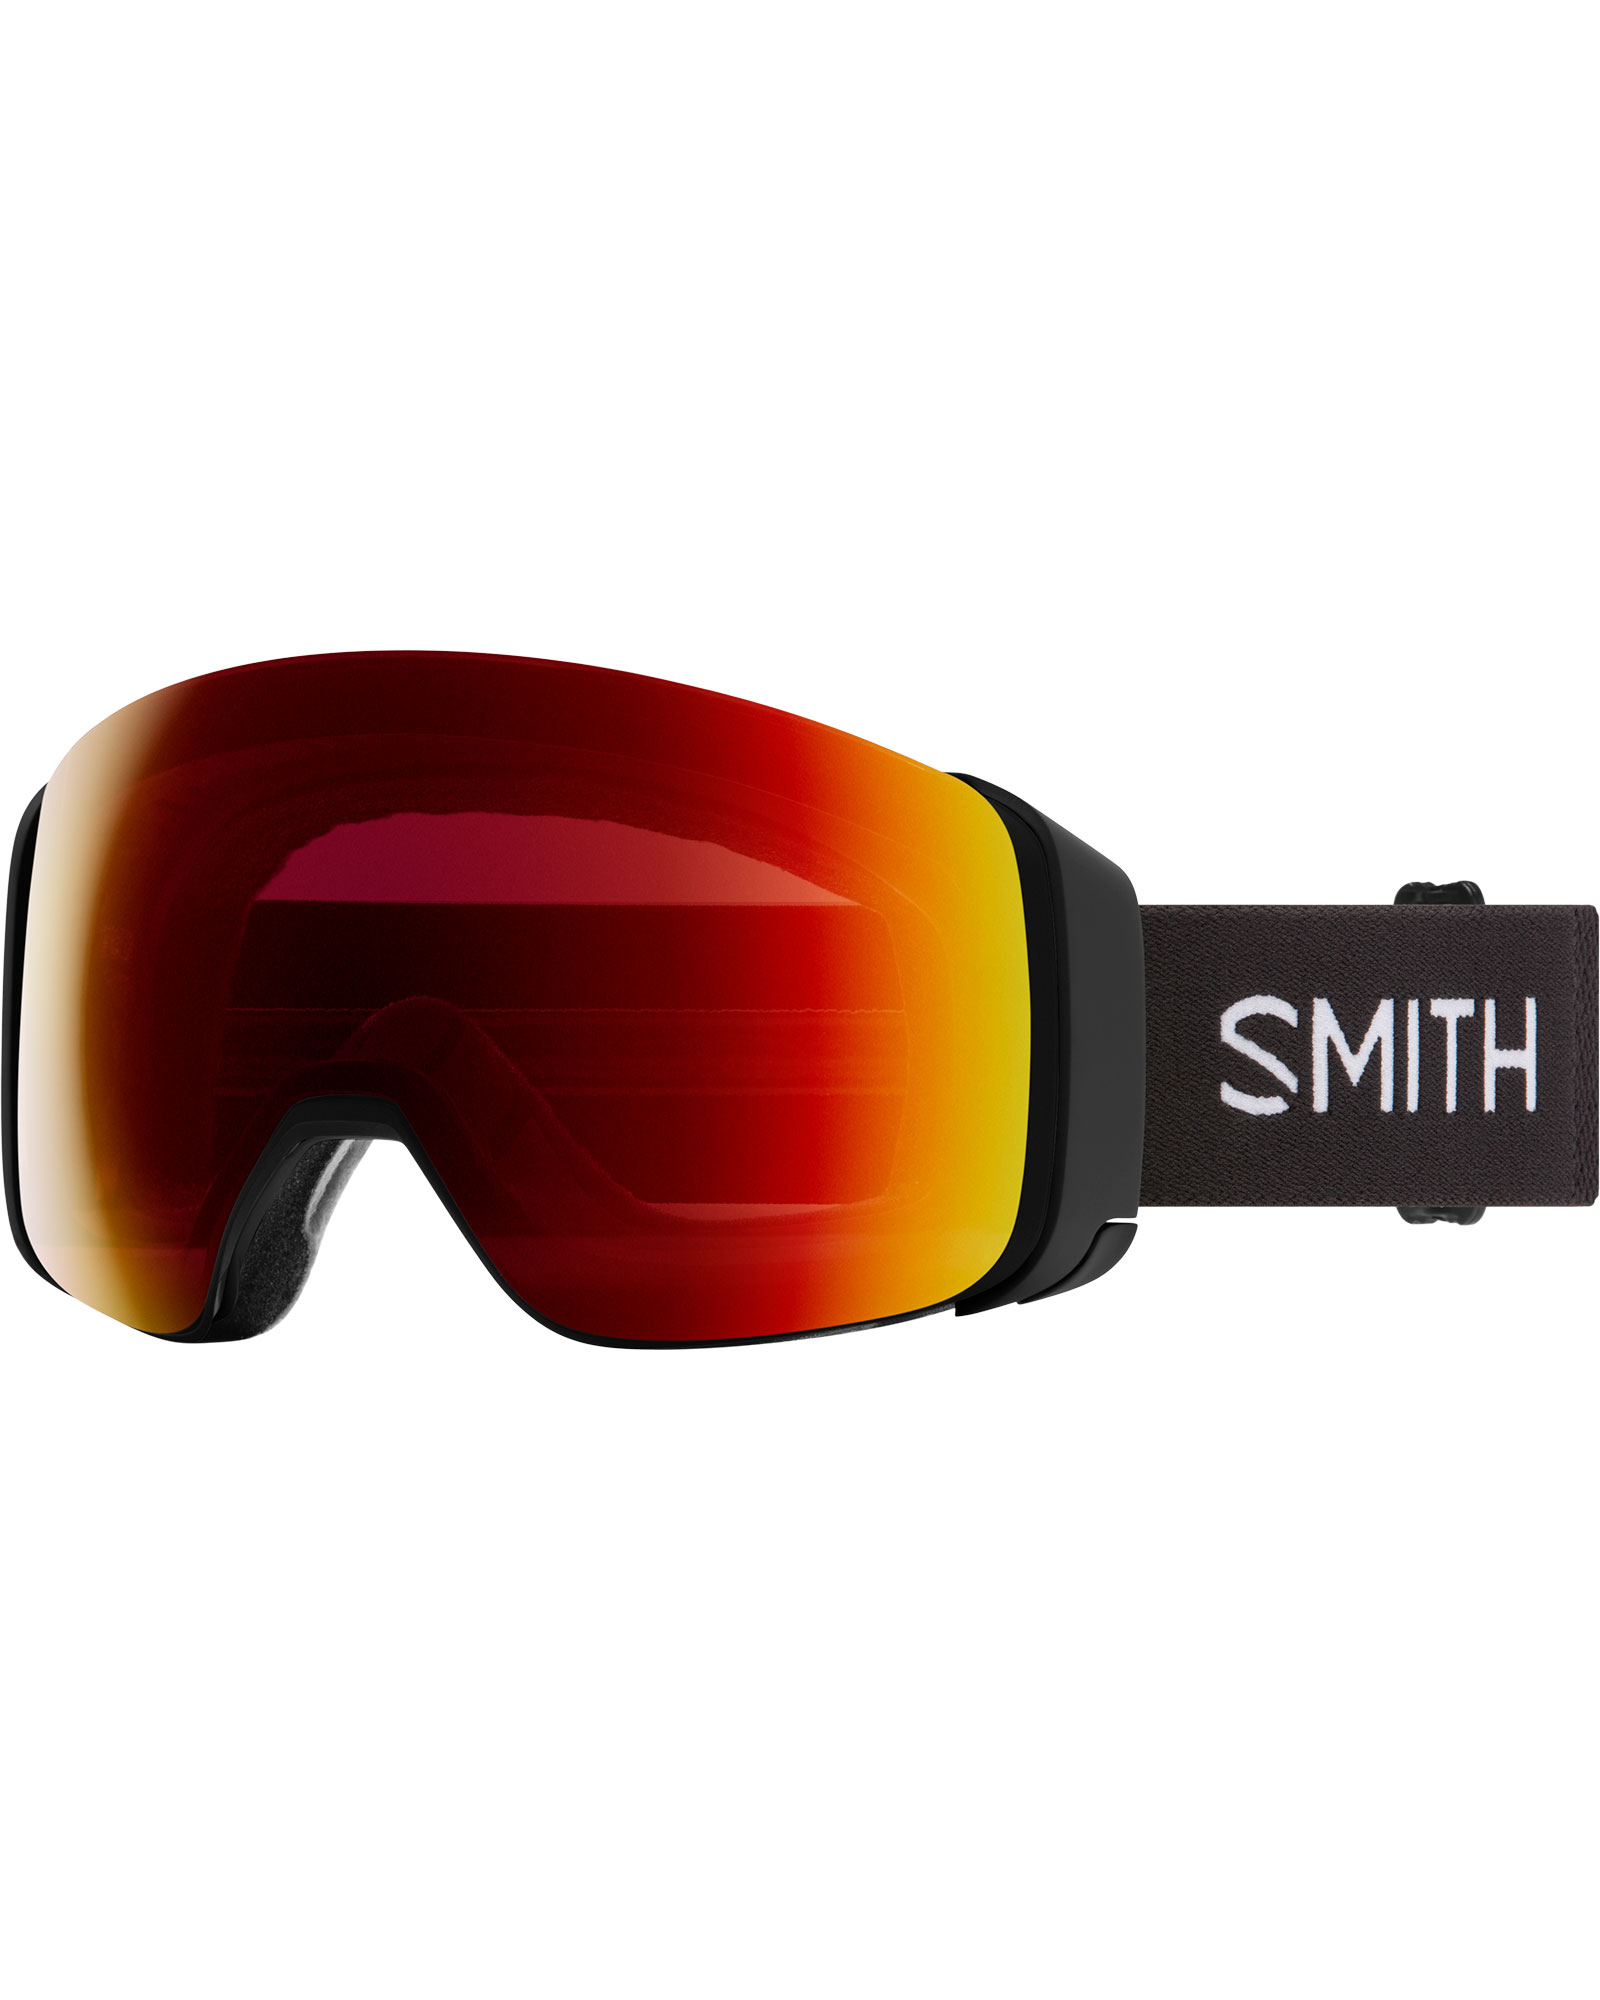 Smith 4D Mag Black / ChromaPop Sun Red Mirror + ChromaPop Storm Yellow Flash Goggles - black